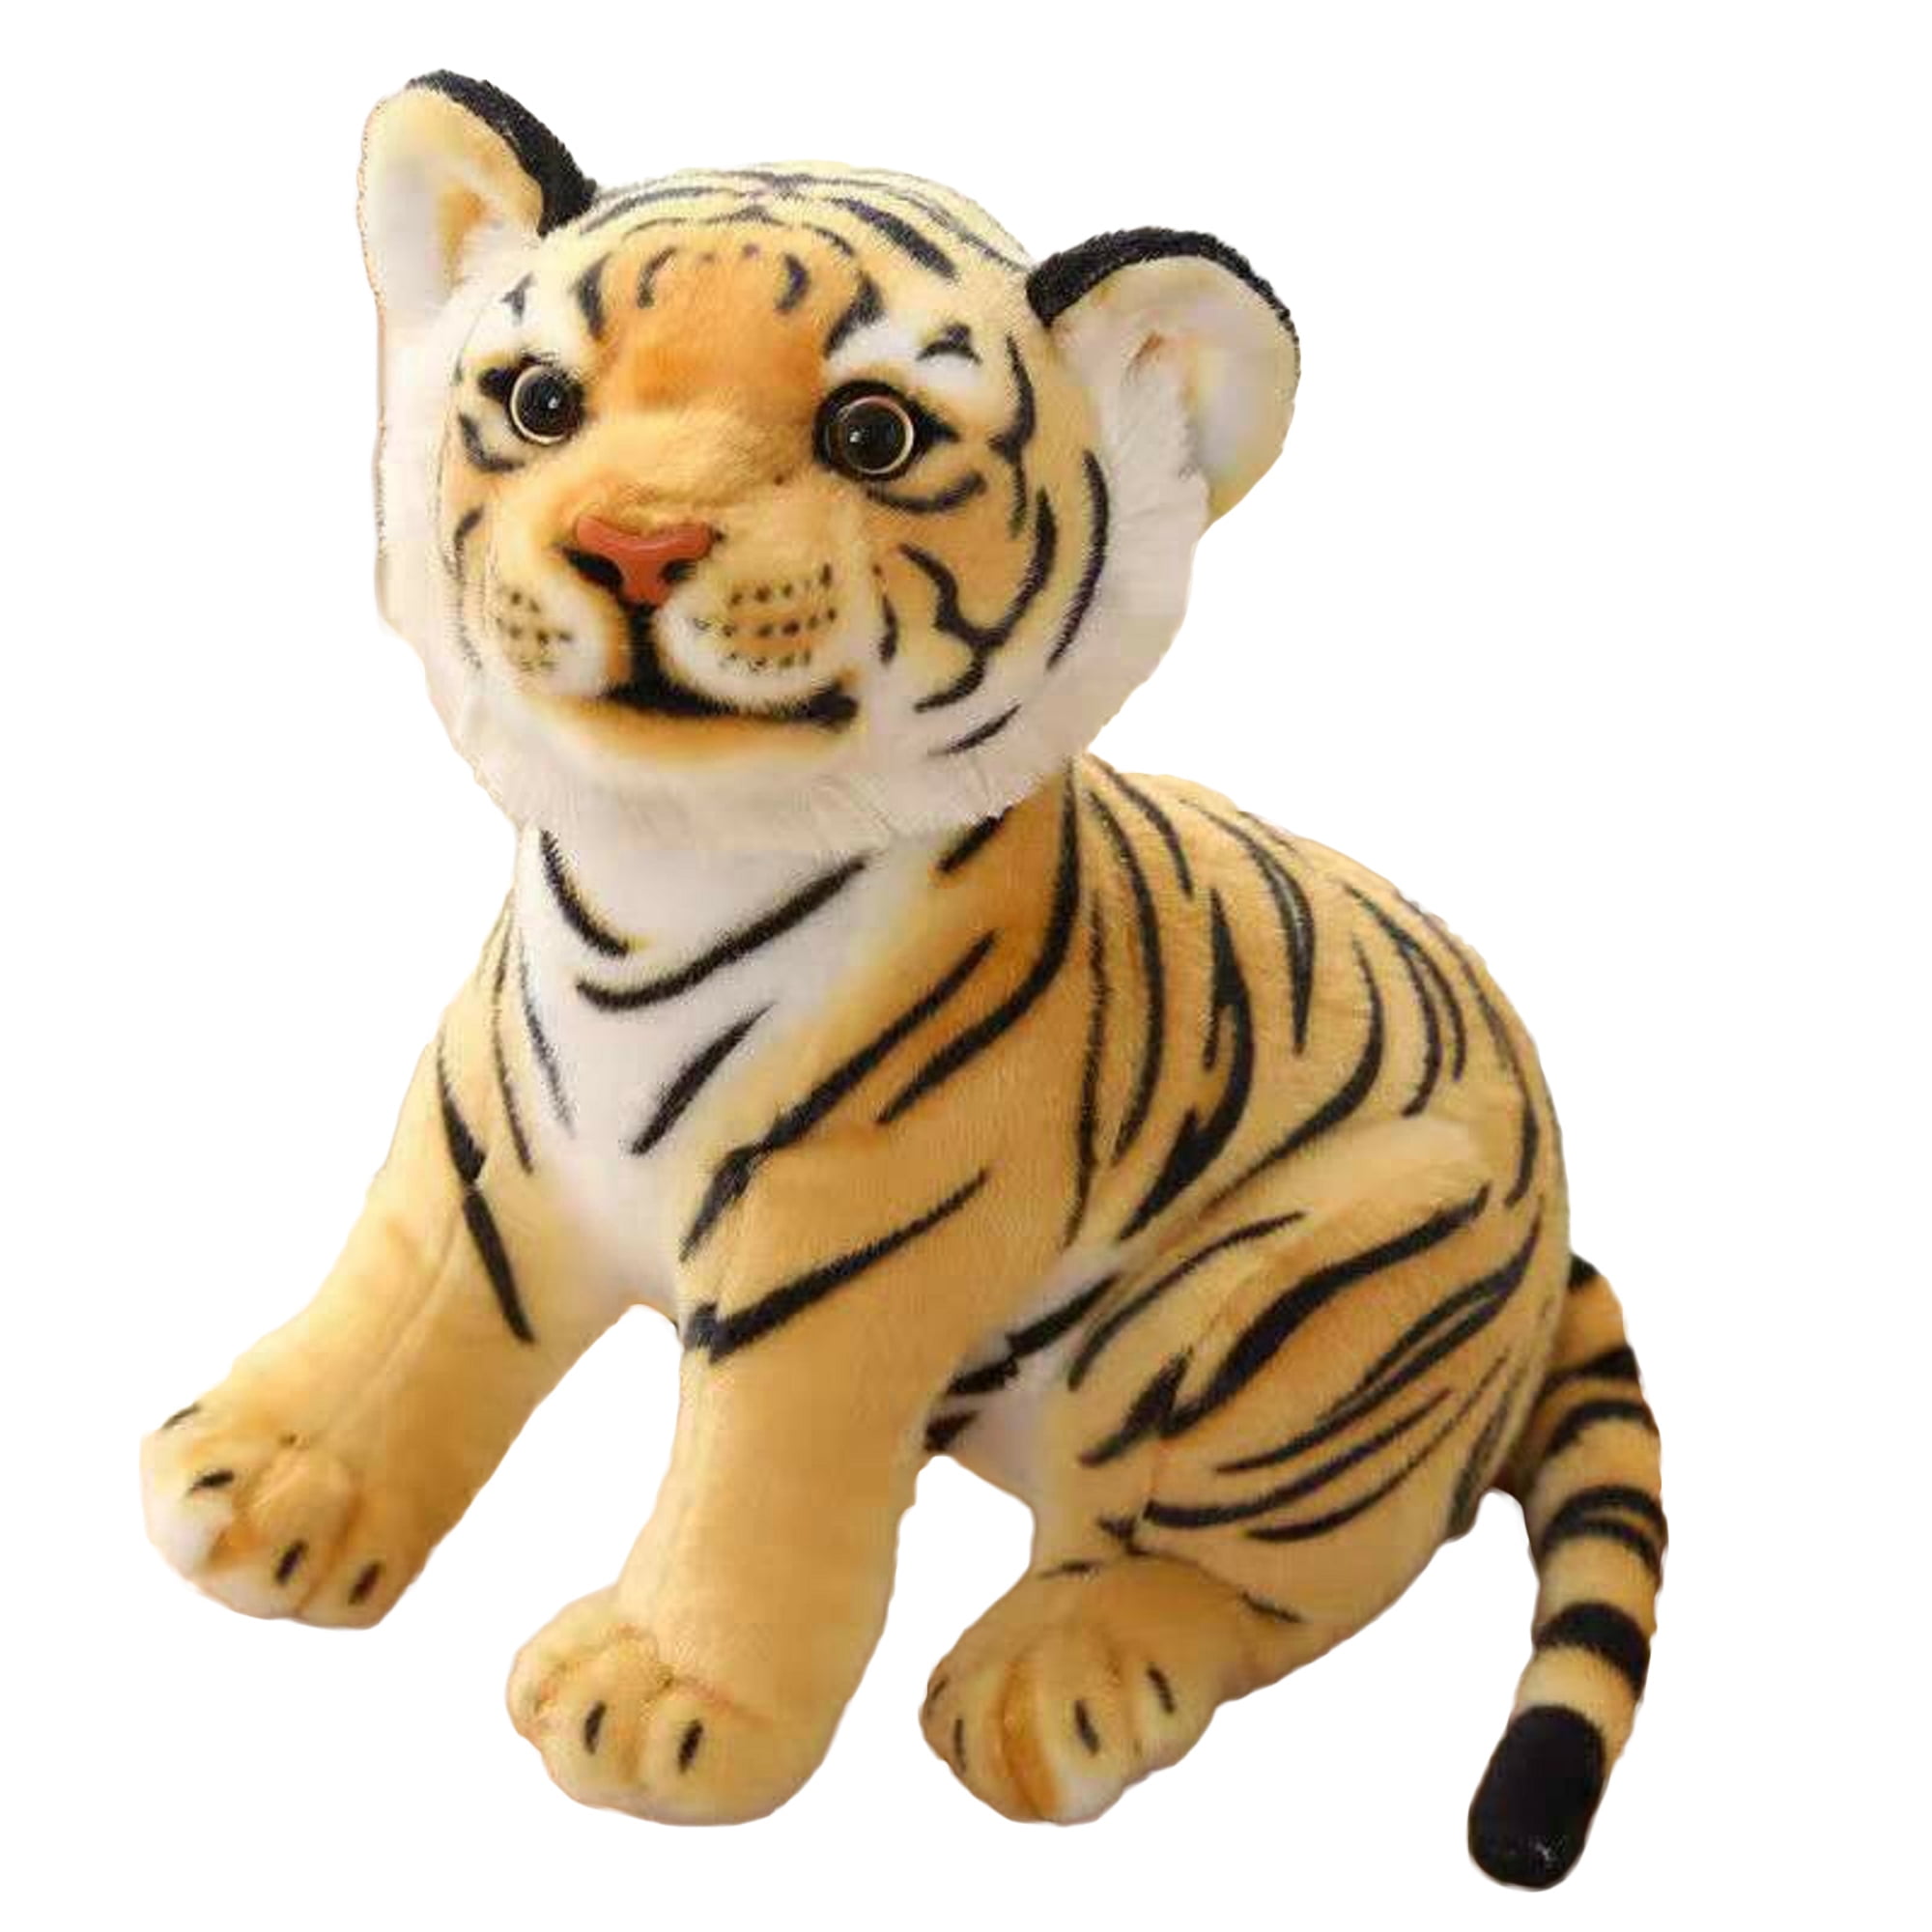 Tiger Stuffed Animal Plush Realistic Toy 24 inches kids stuffed animal great 